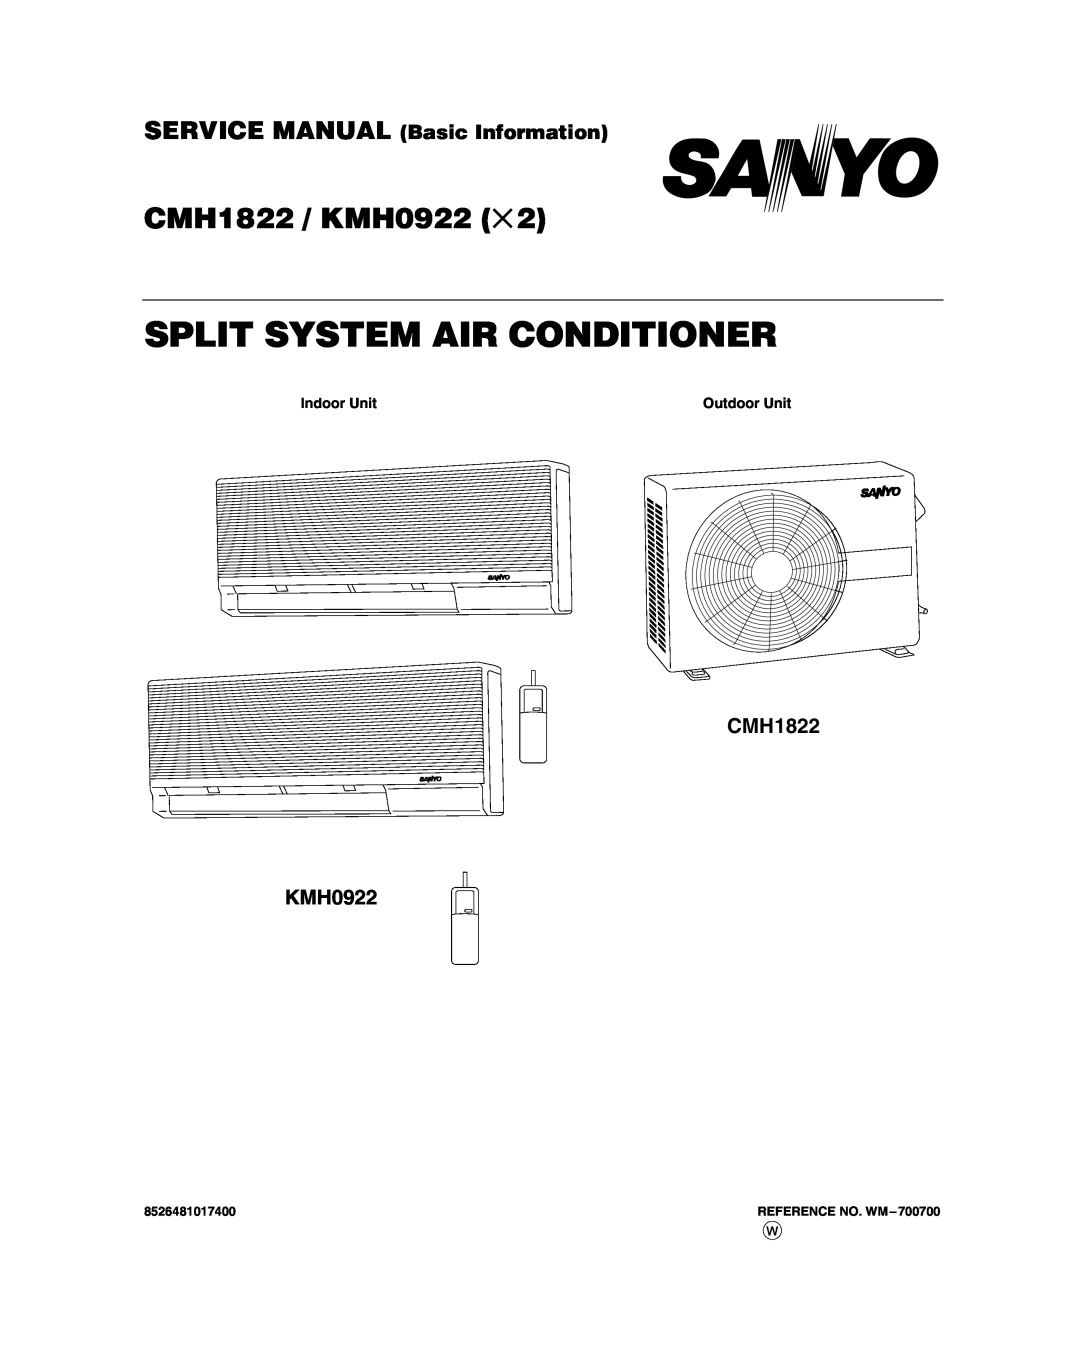 Sanyo service manual Split System Air Conditioner, CMH1822 / KMH0922, CMH1822 KMH0922, Indoor Unit, Outdoor Unit 